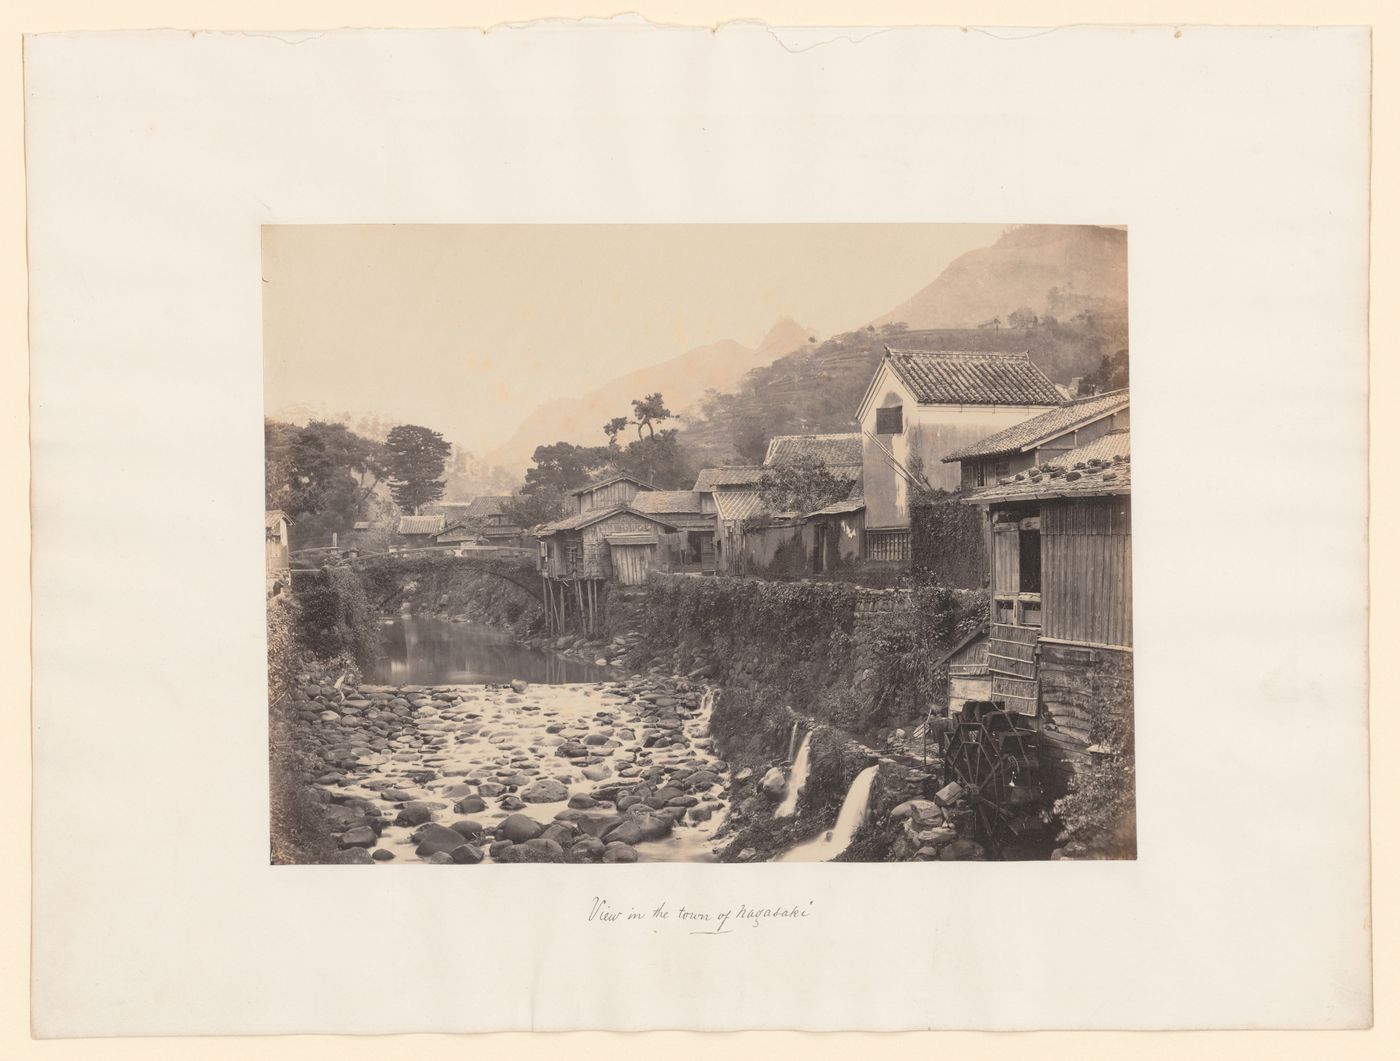 View of houses, a bridge and the Nakashima River, Nagasaki, Japan